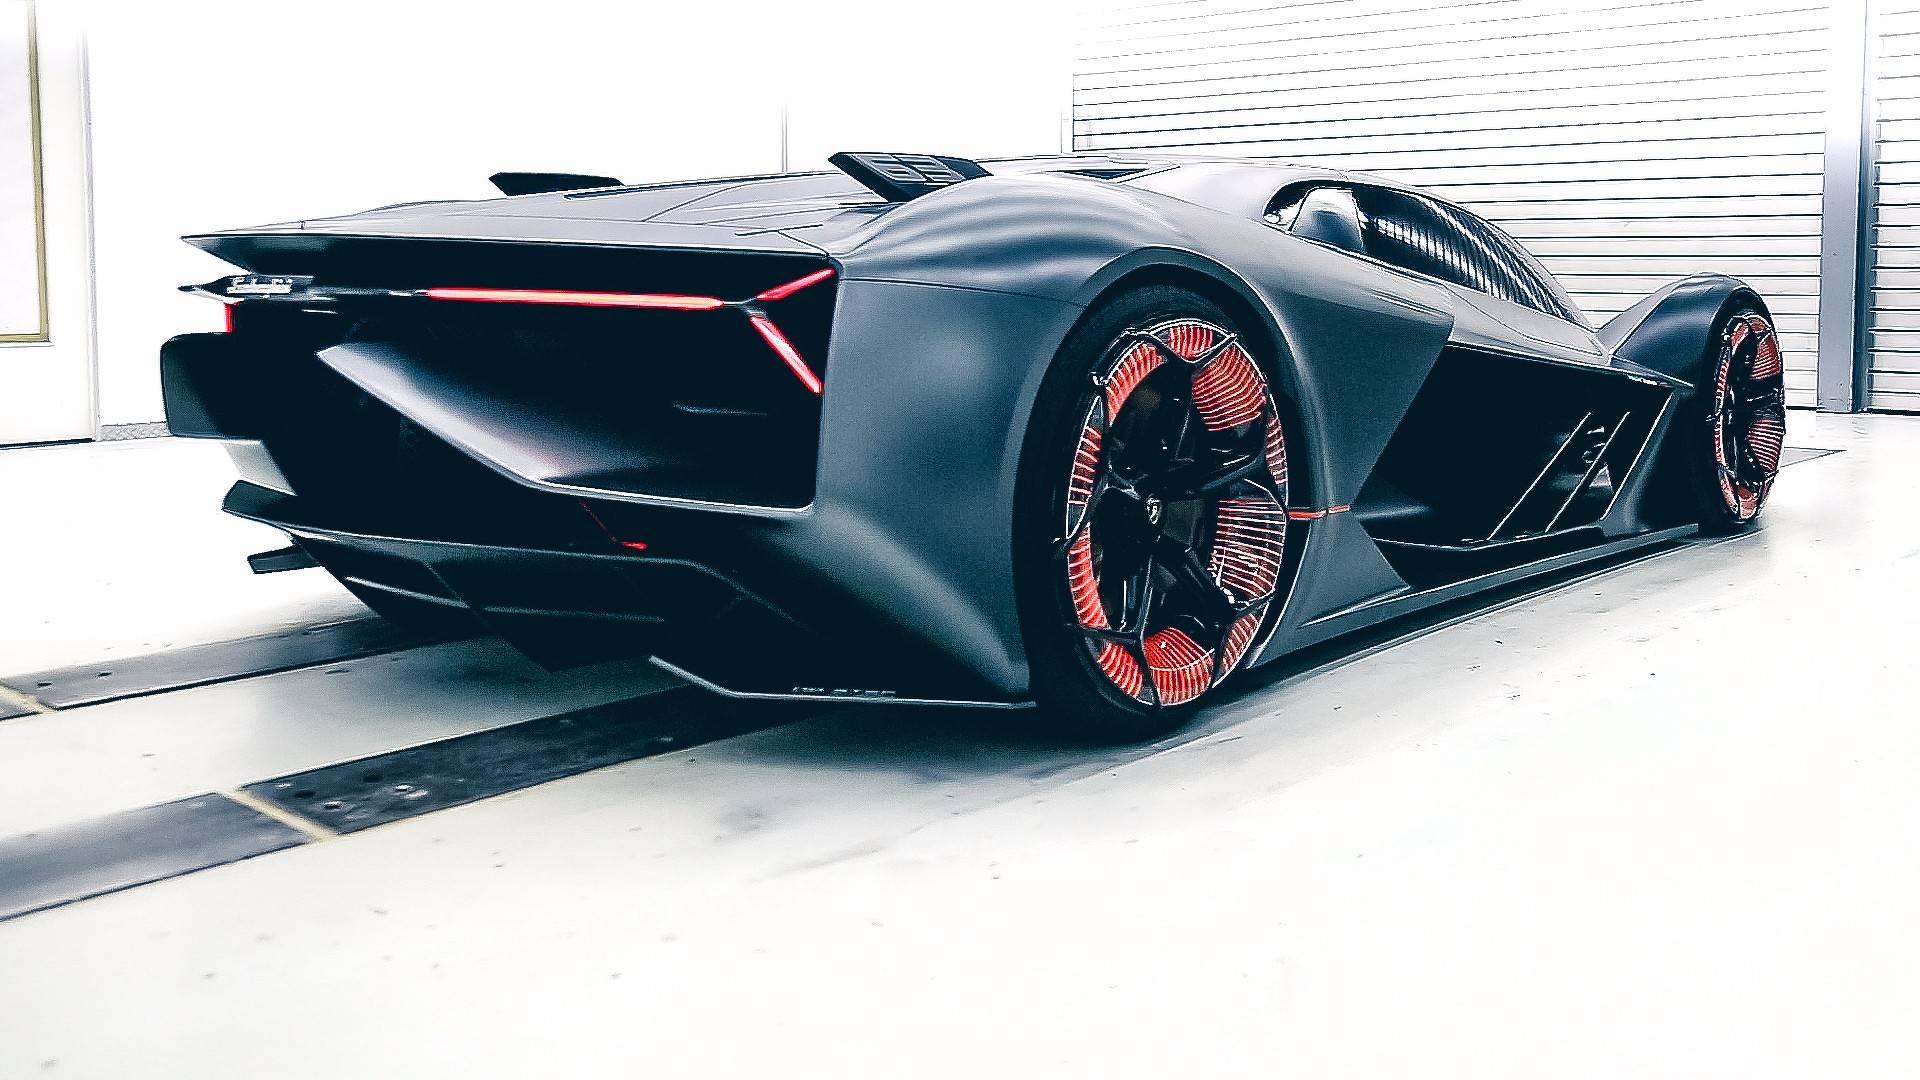 Lamborghini presentará un superdeportivo híbrido en Frankfurt, ¡prepárate!